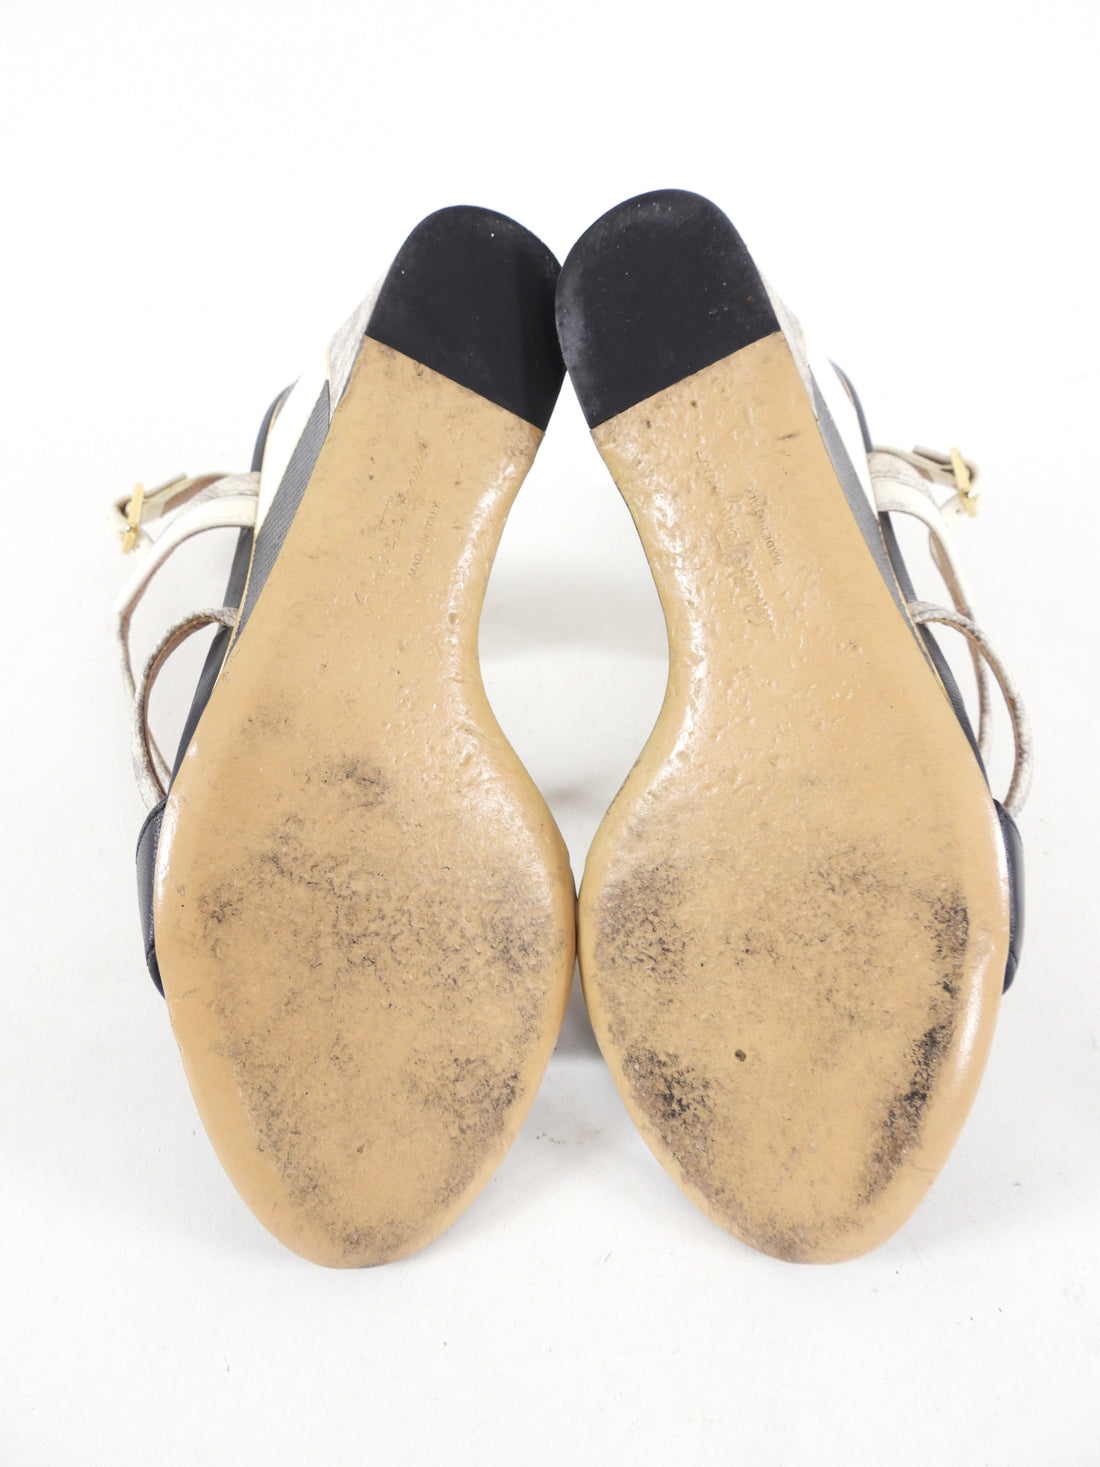 Ferragamo Black and White Geometric Wedge Sandals - USA 6